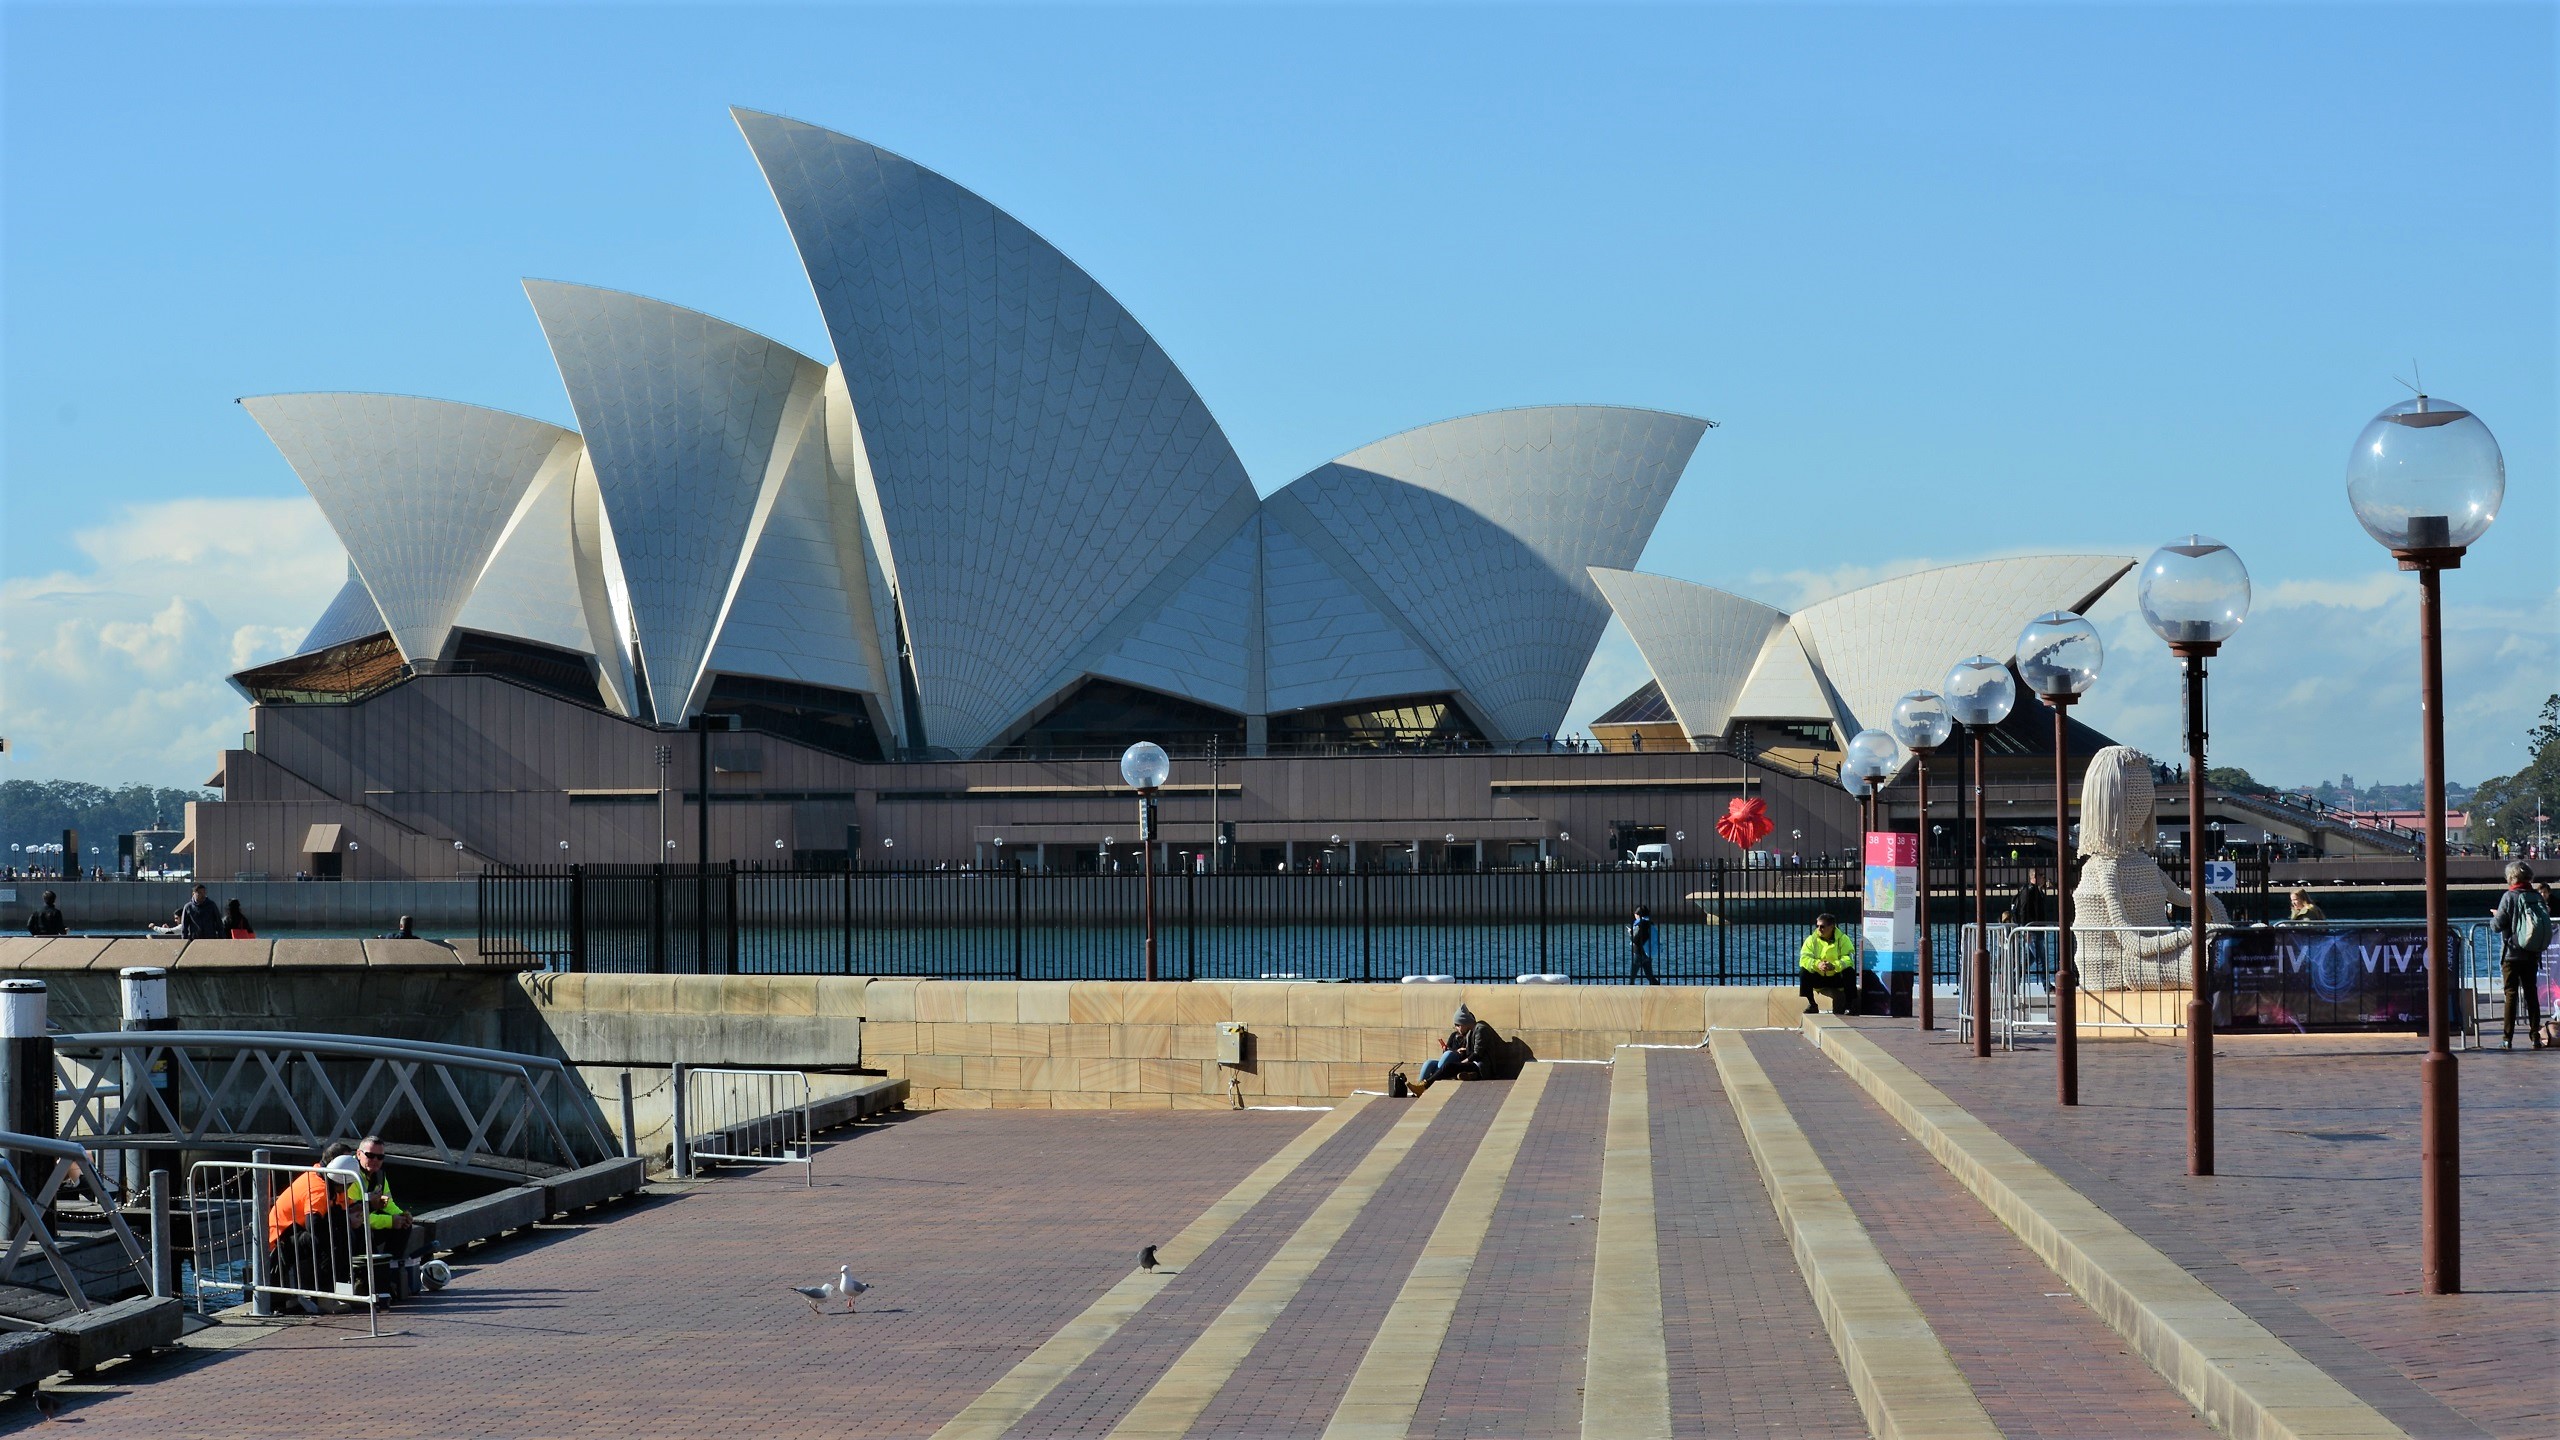 The Sydney Opera House, Australia by lonewolf6738